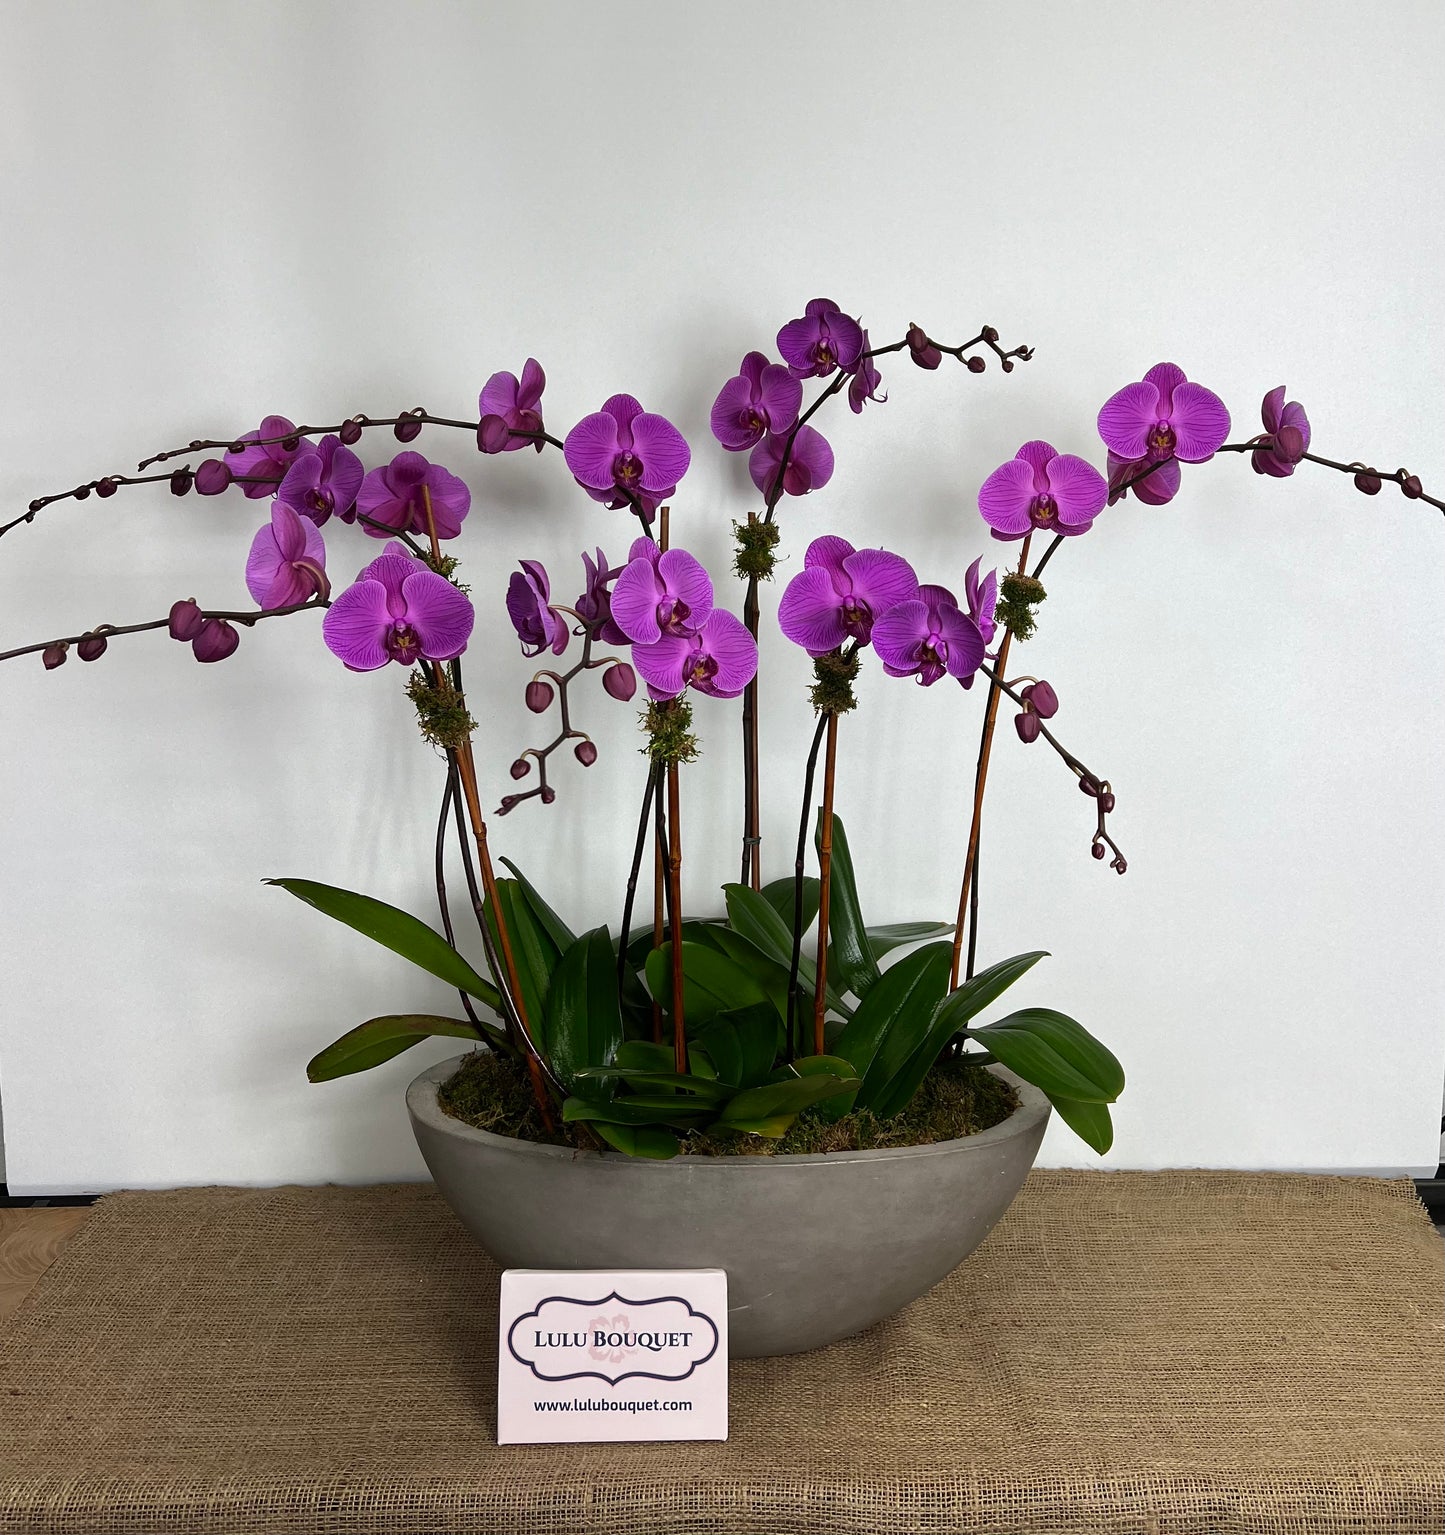 Lulu's signature Orchid Arrangement